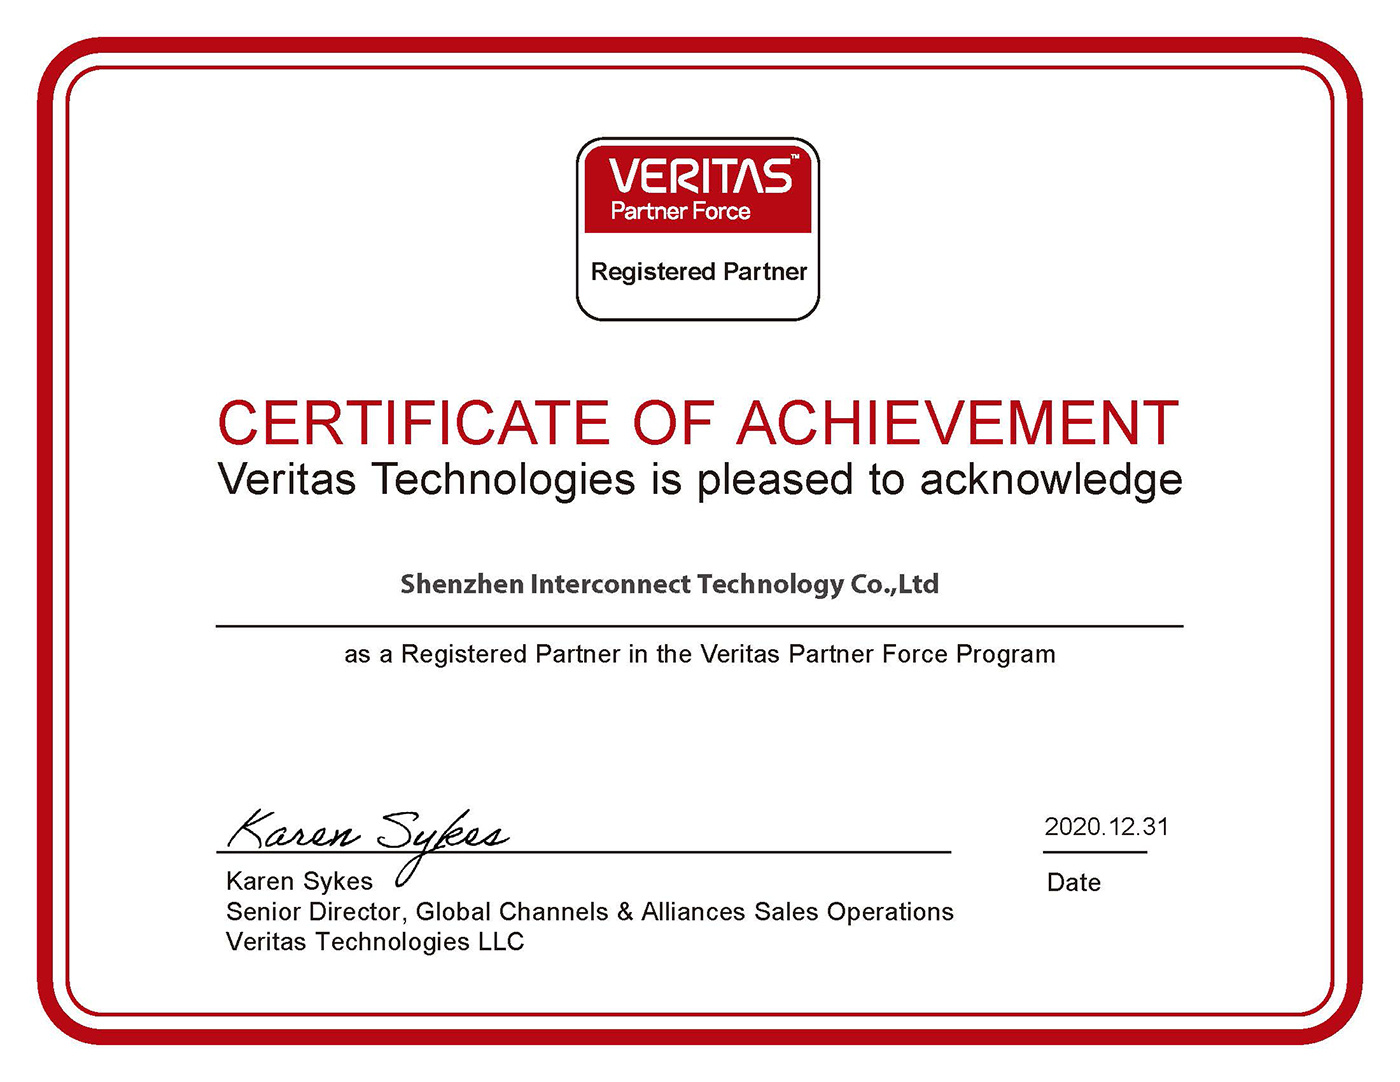 veritas-Partner Force Program Registered Certificate